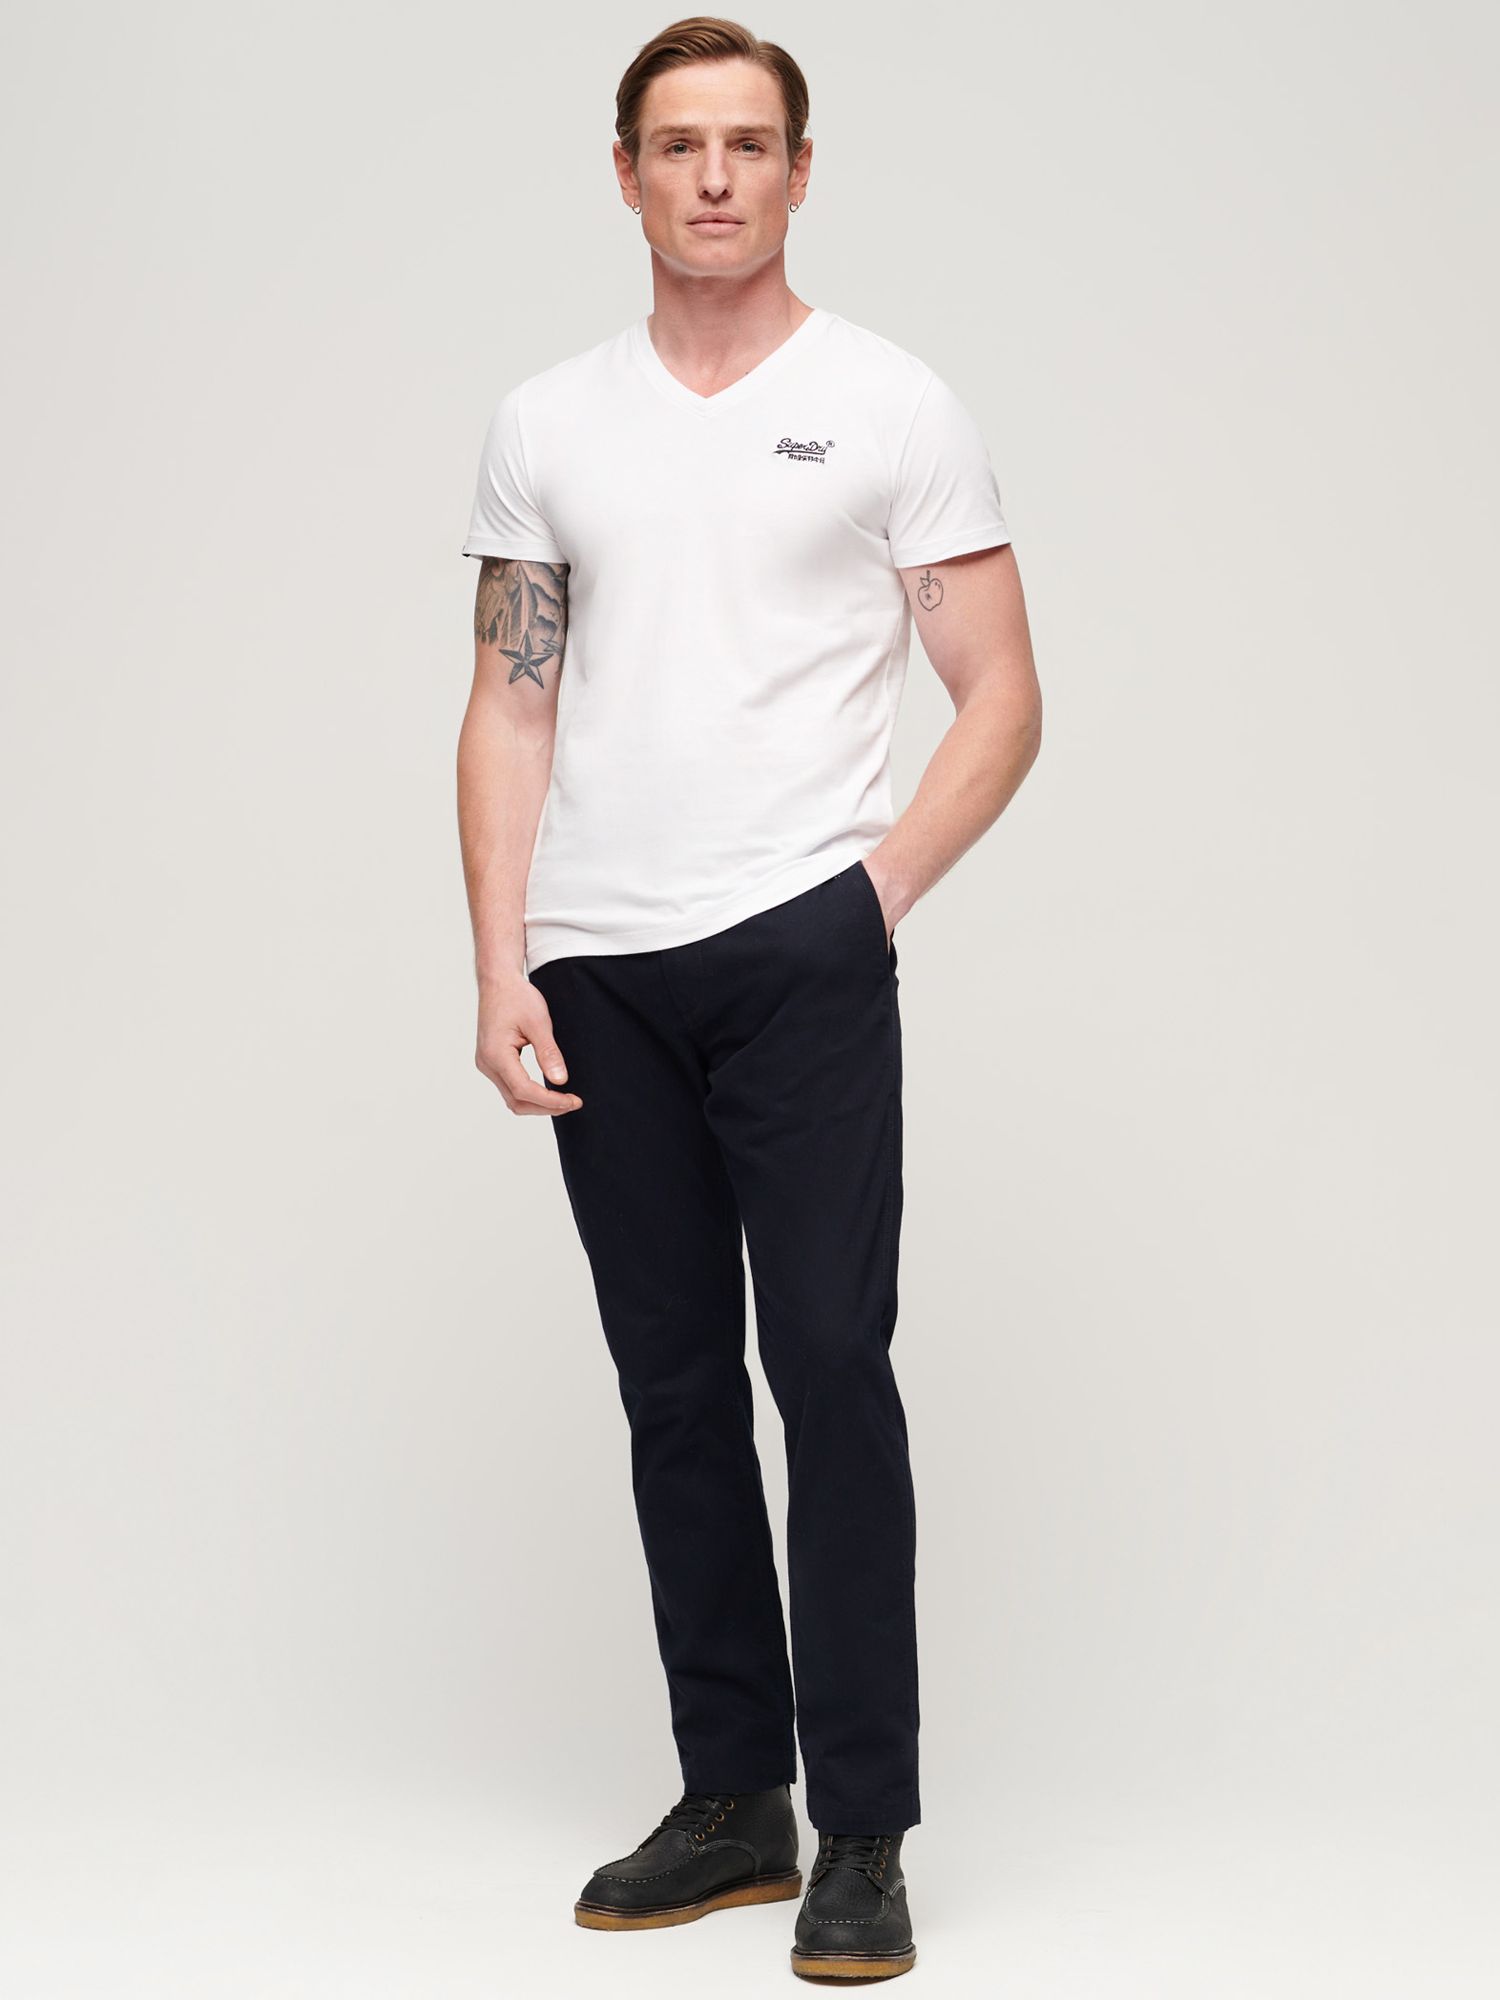 Superdry Organic Cotton Embroidered Logo V-Neck T-Shirt, White, L